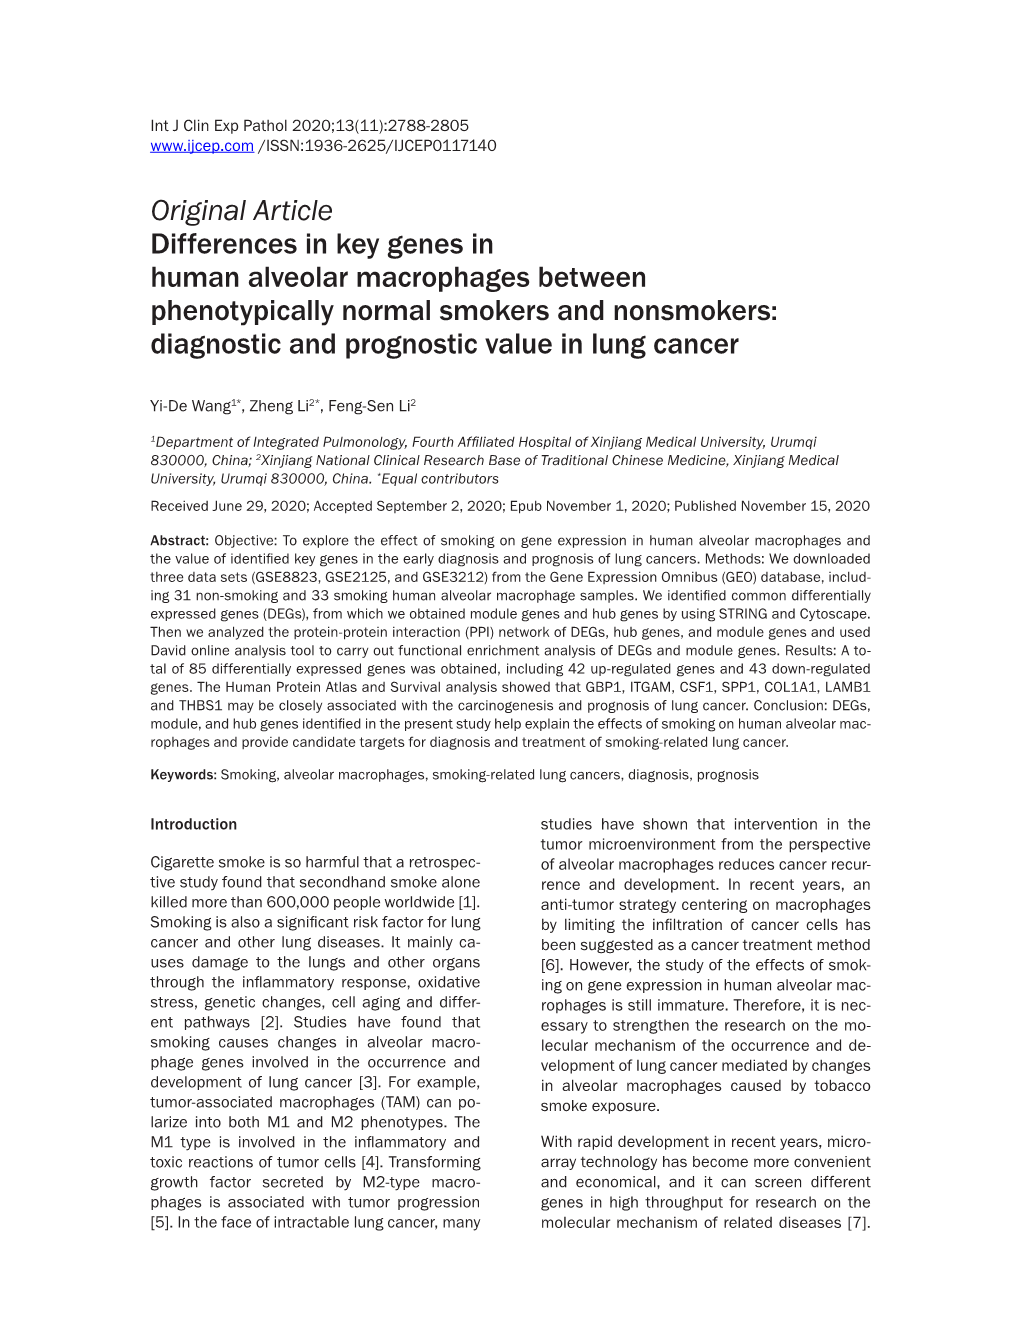 Original Article Differences in Key Genes in Human Alveolar